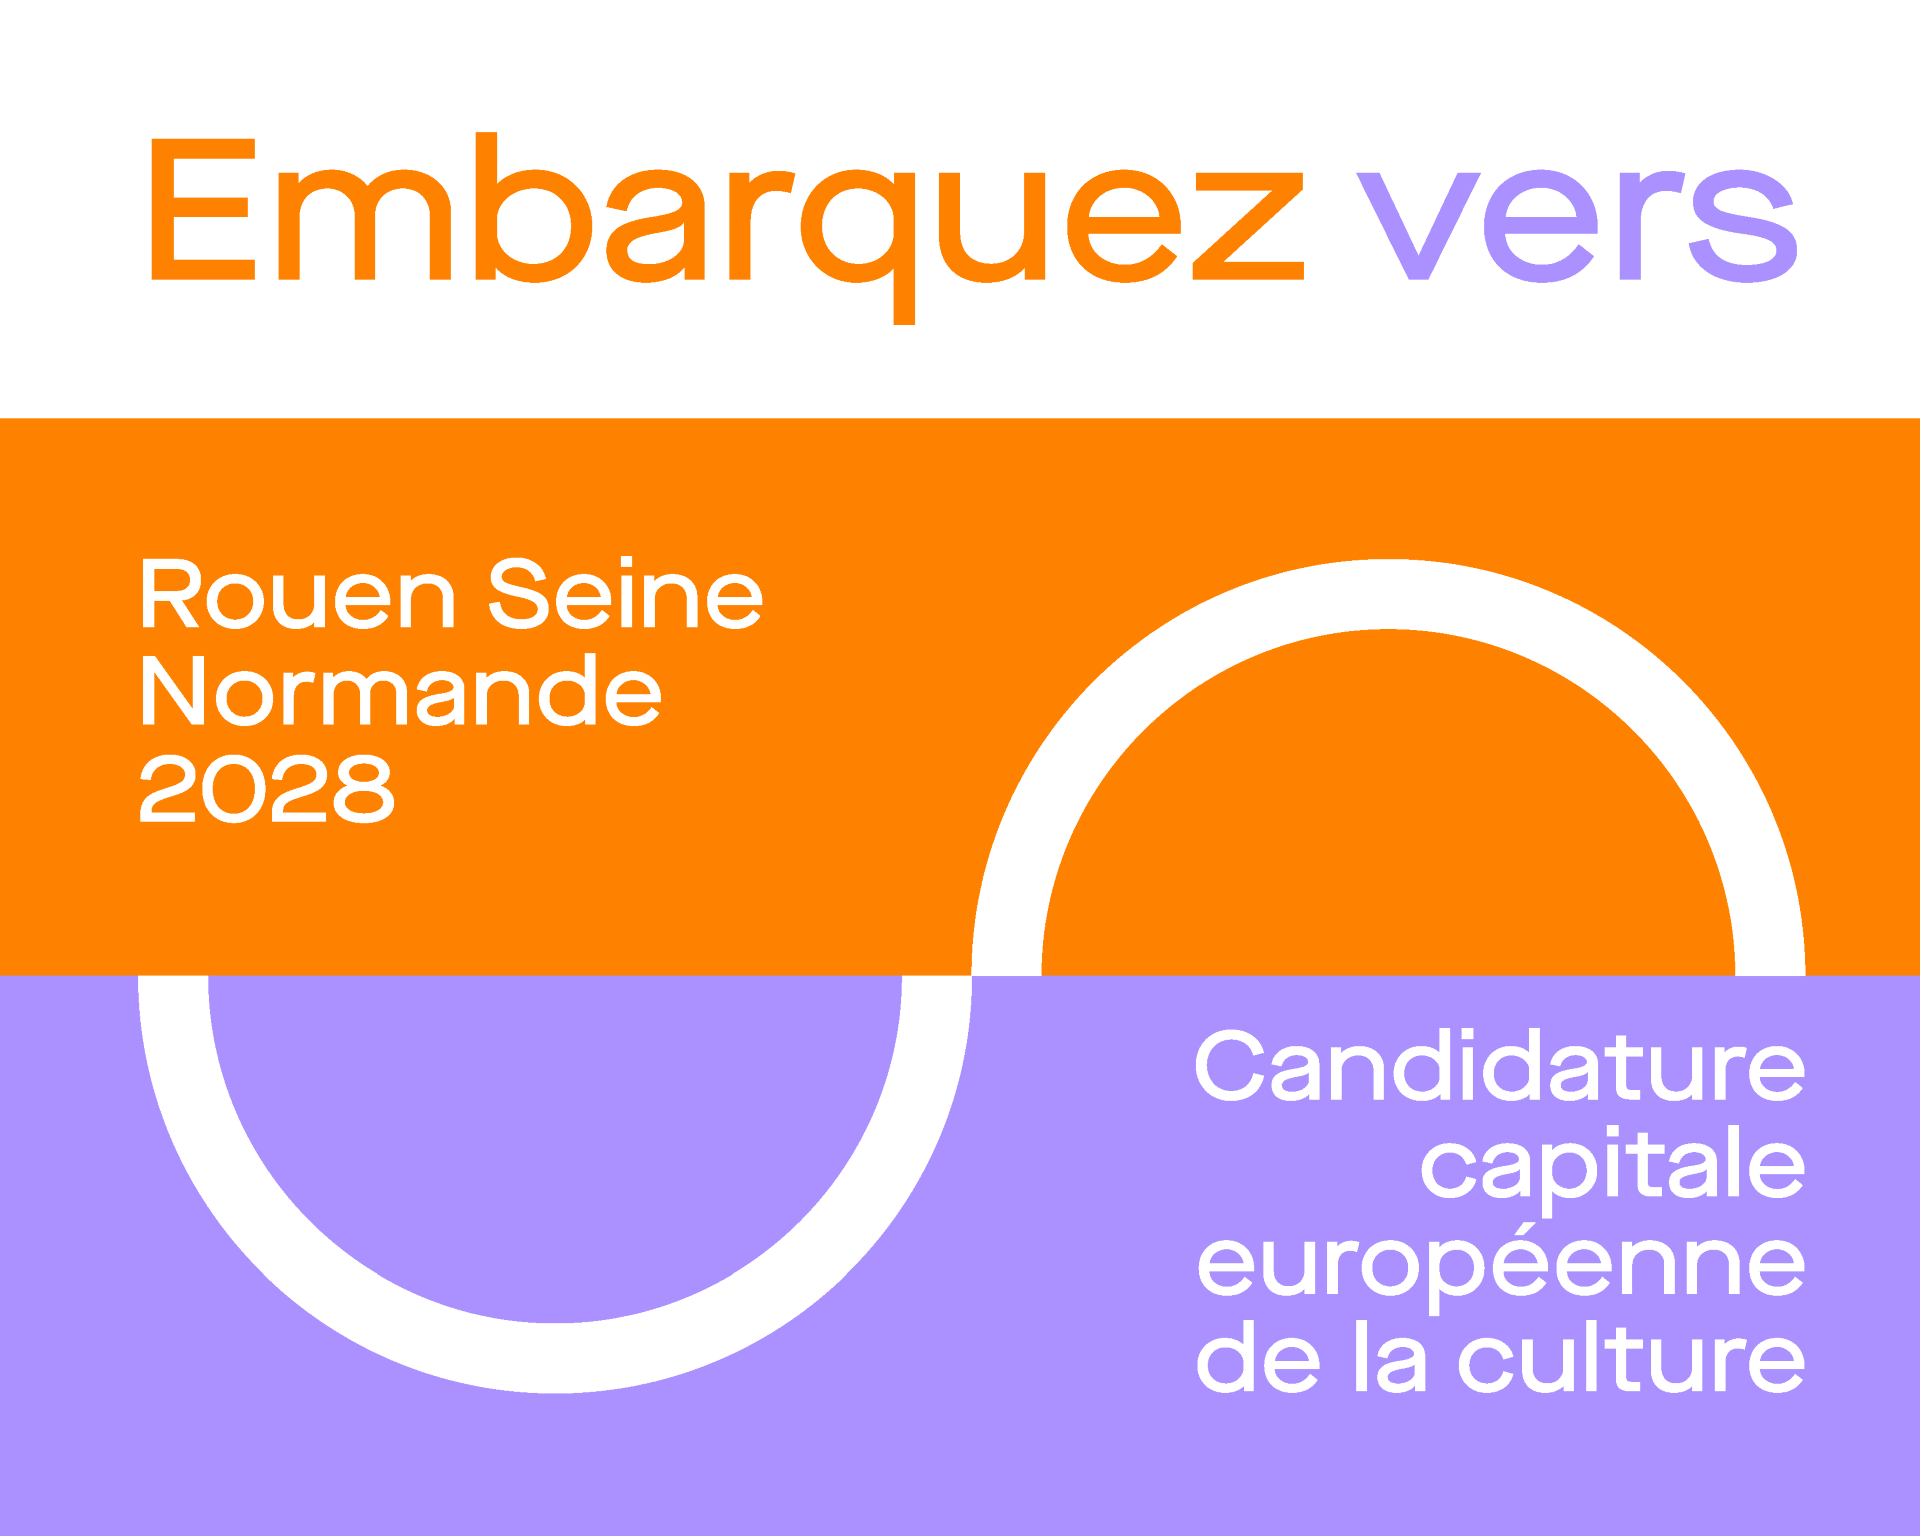 Rouen Seine Normande 2028 embarque pour la seconde phase de sa candidature